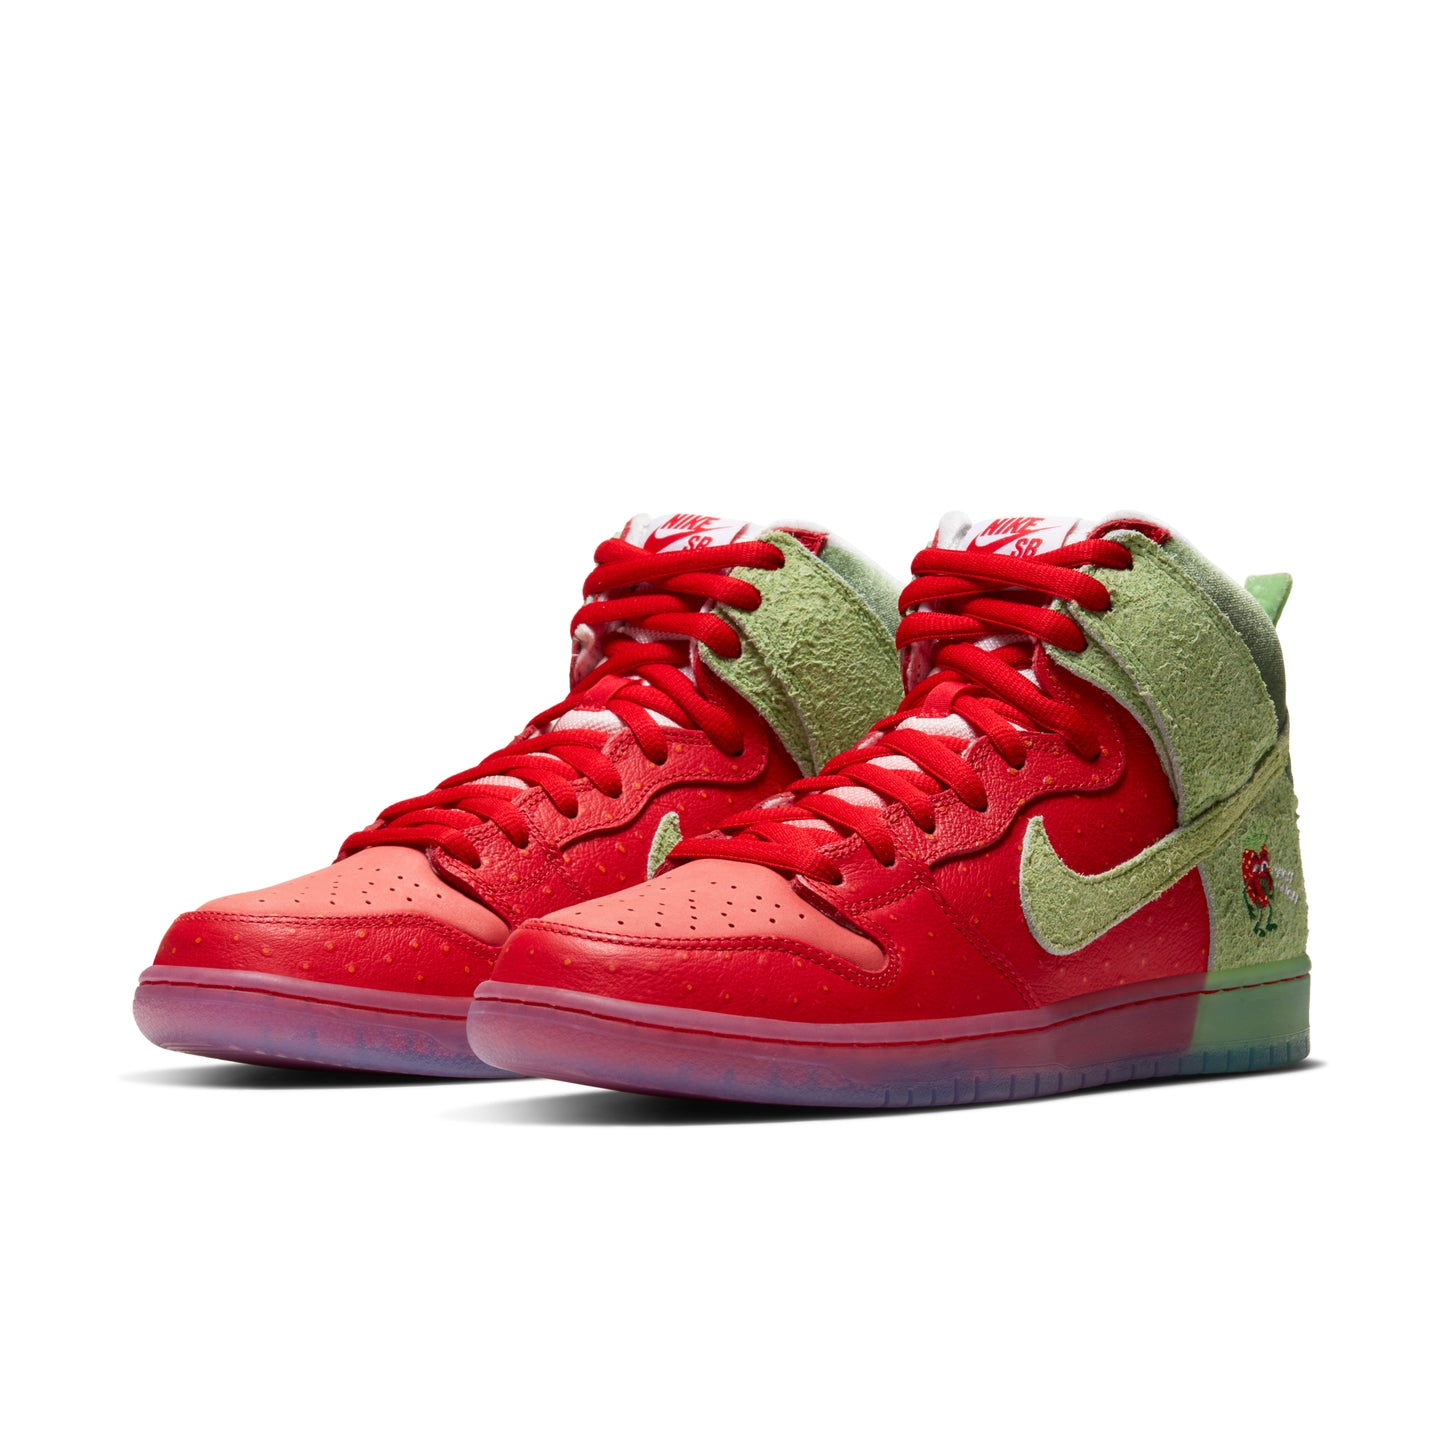 Nike SB Dunk High Pro QS "Strawberry Cough"